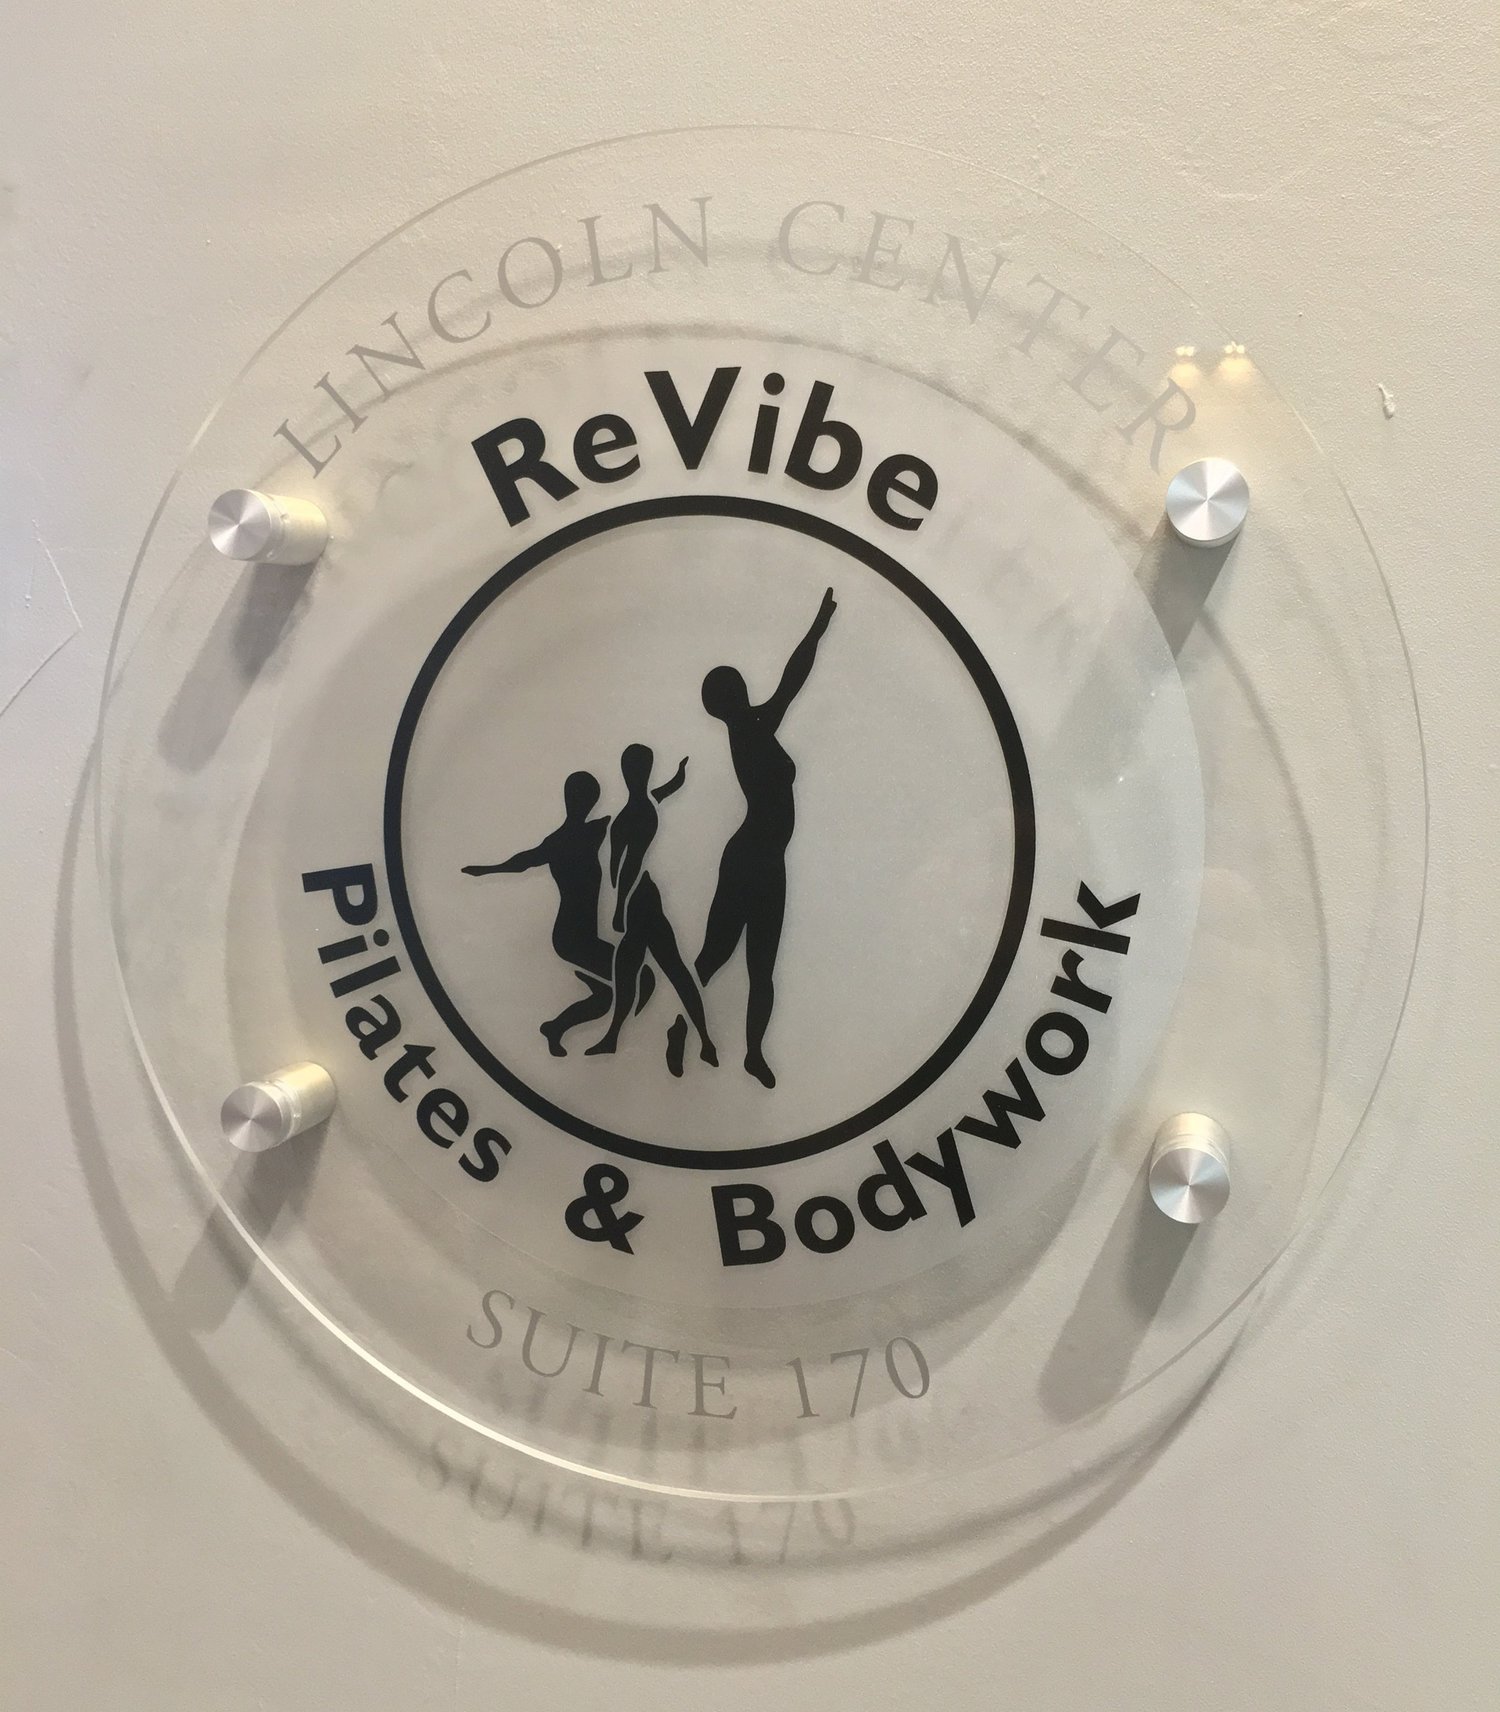 Revibe Pilates And Bodywork Image